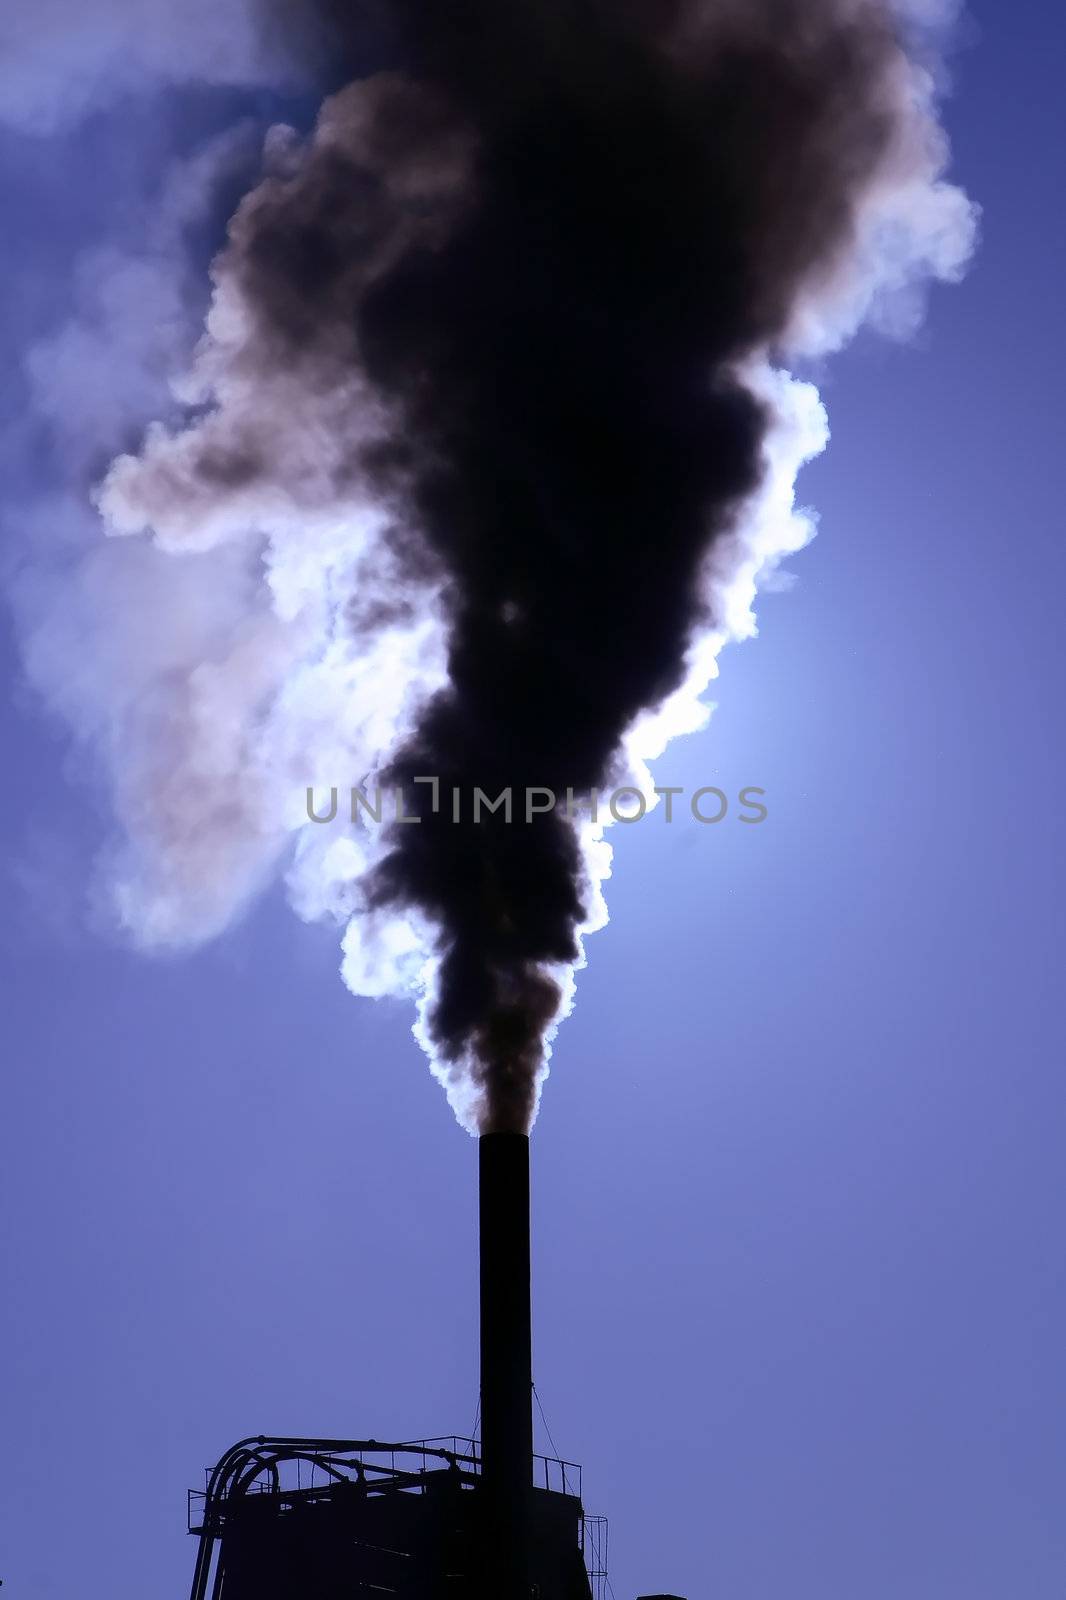 Smokestack Pollution by Polaric